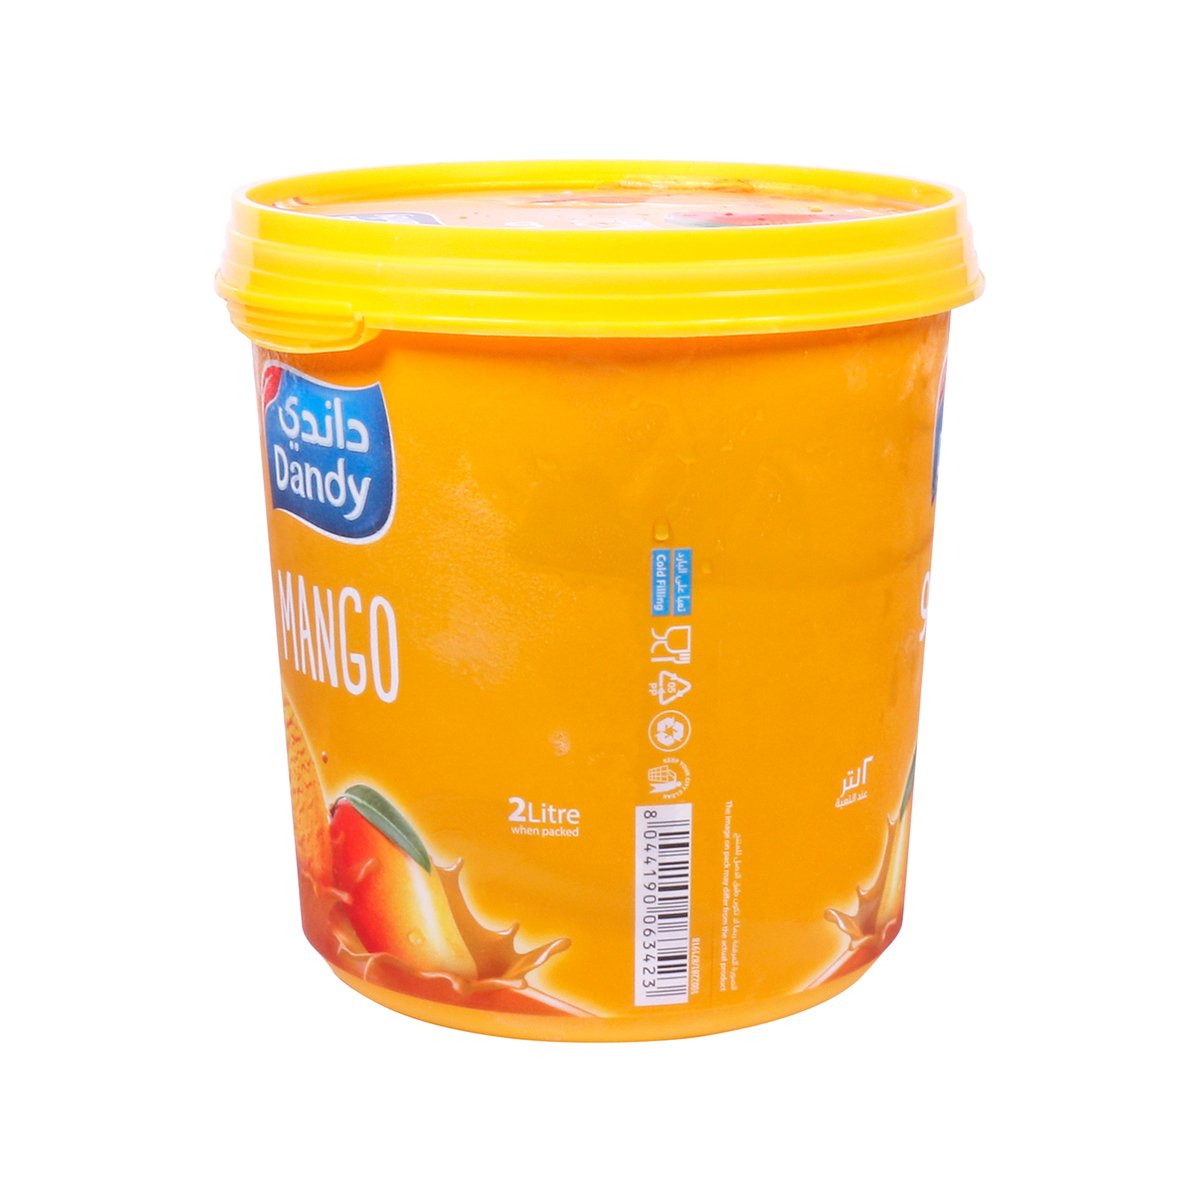 Dandy Mango Ice Cream 2Litre